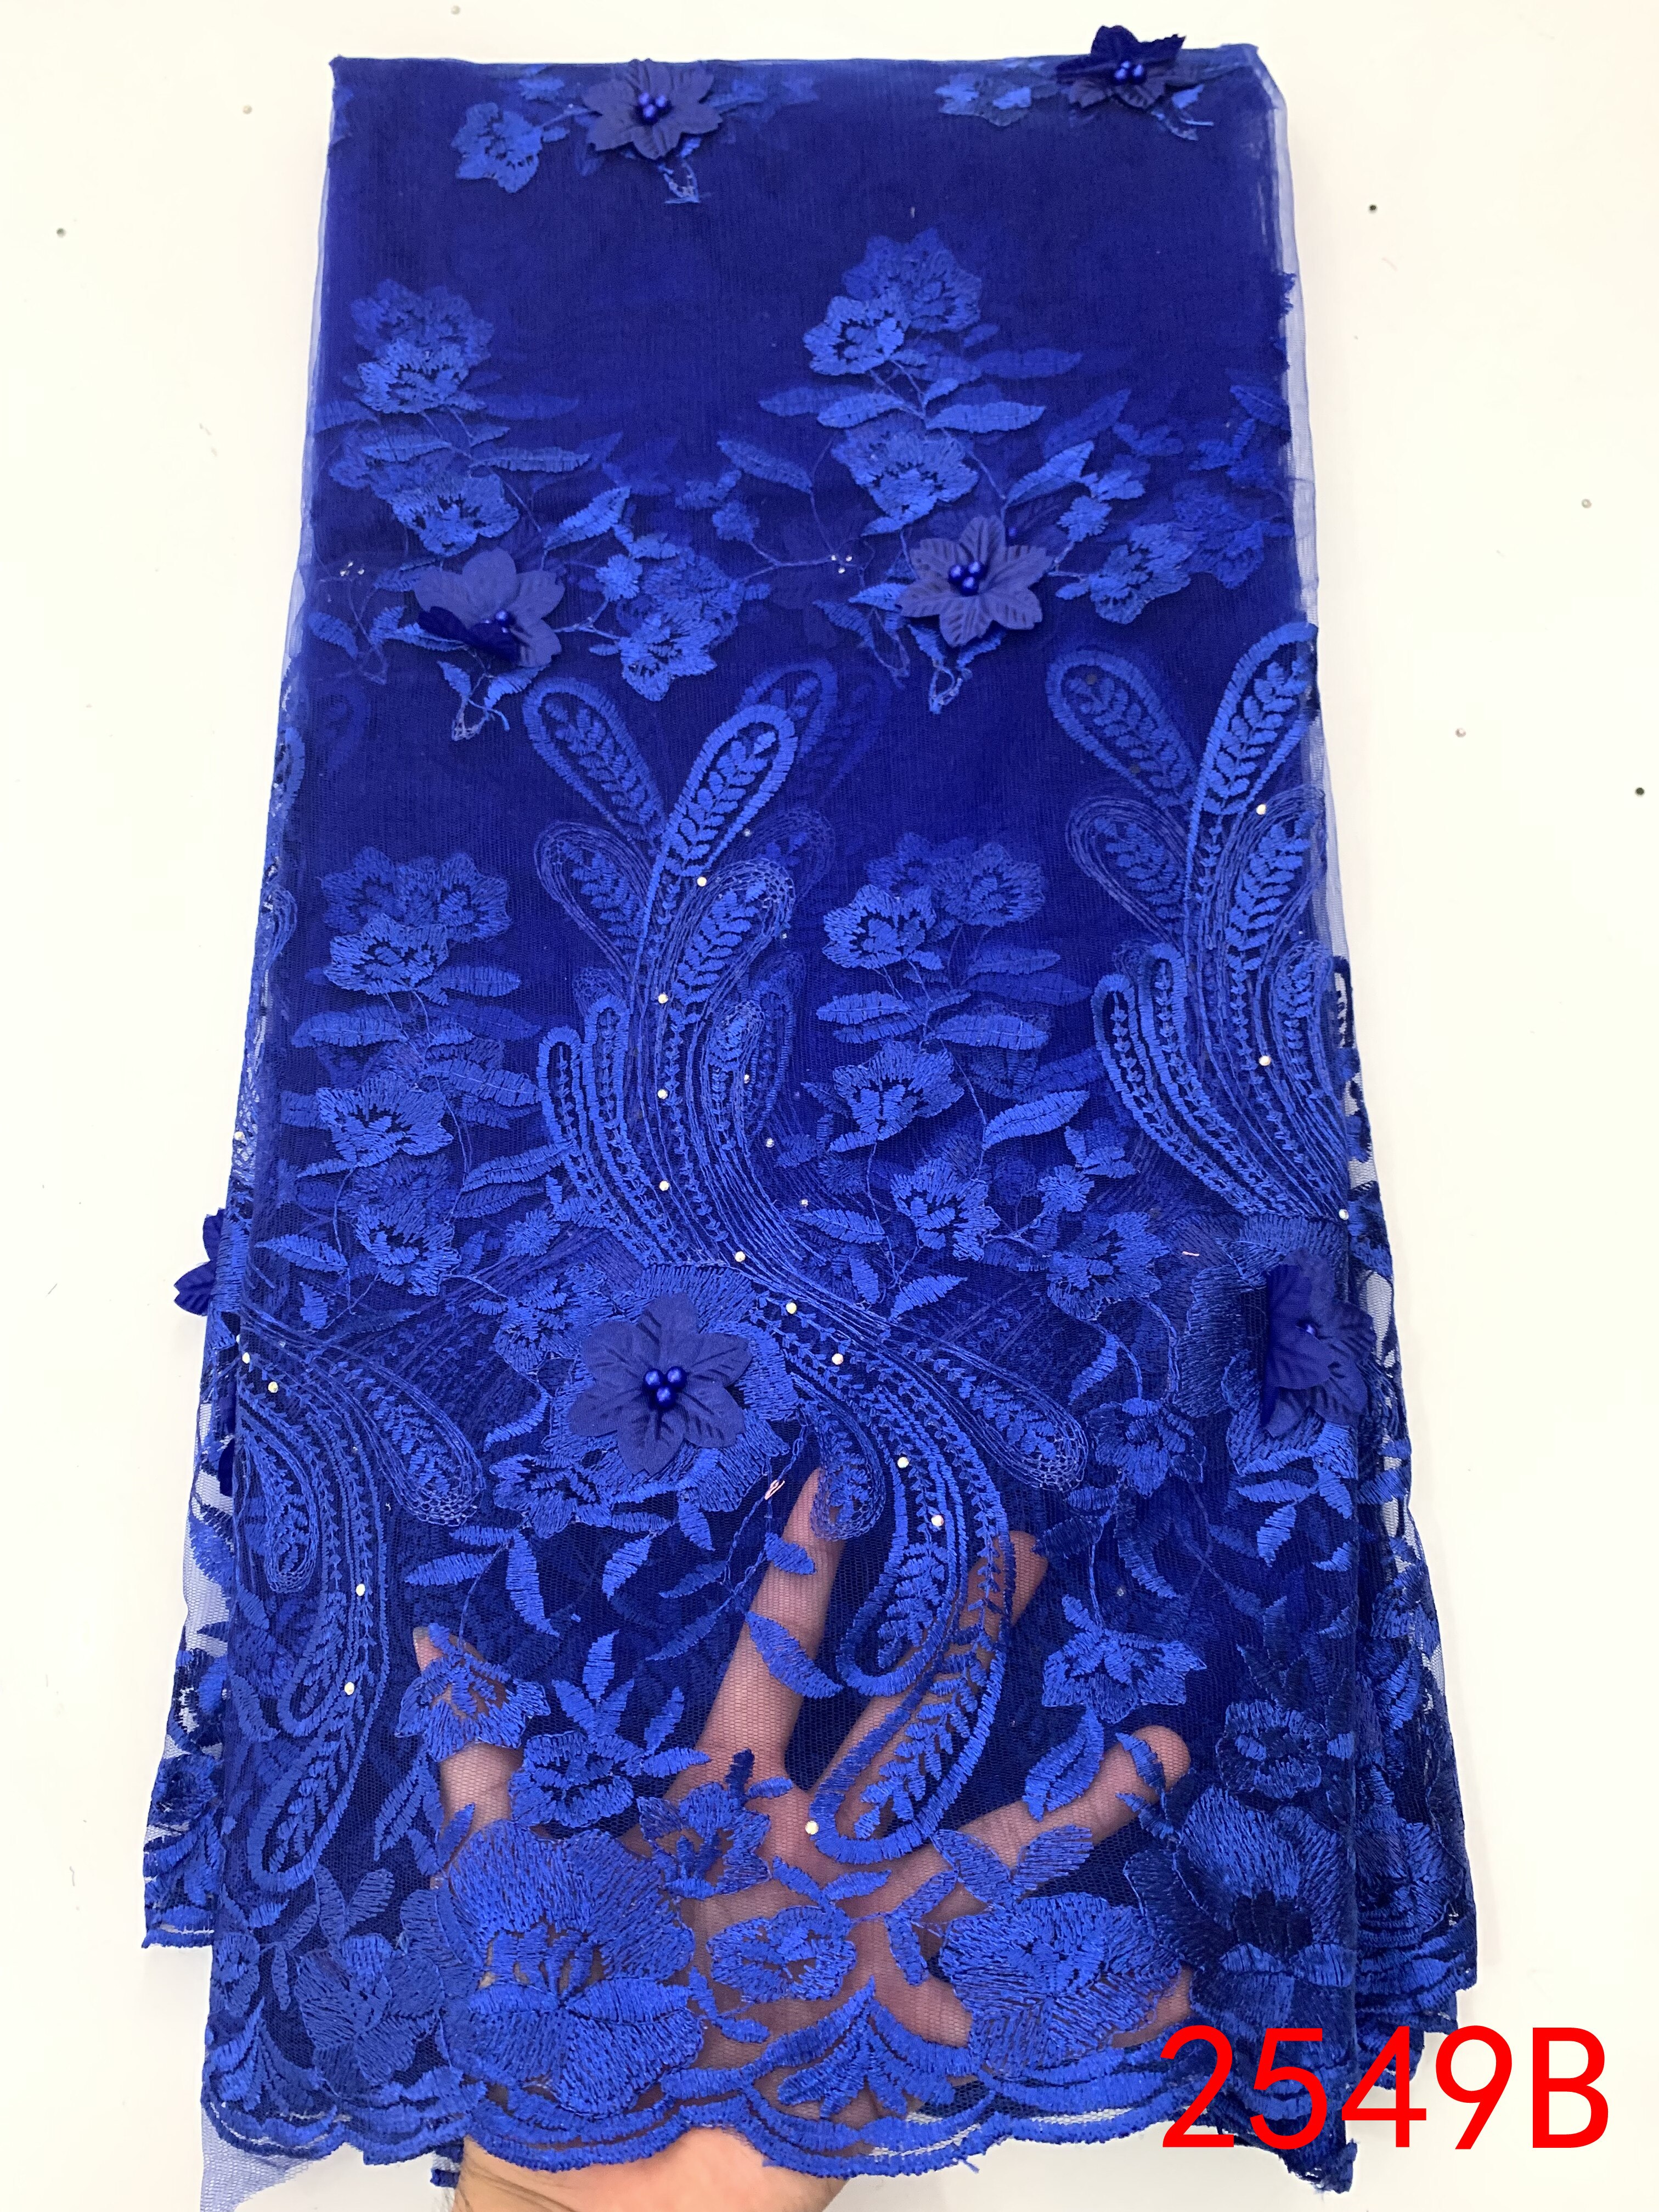 Afrikansk tyl blonder stof fransk 3d blomster blonder stof nigeriansk broderi applikationer blonder til kjole  ks2549b